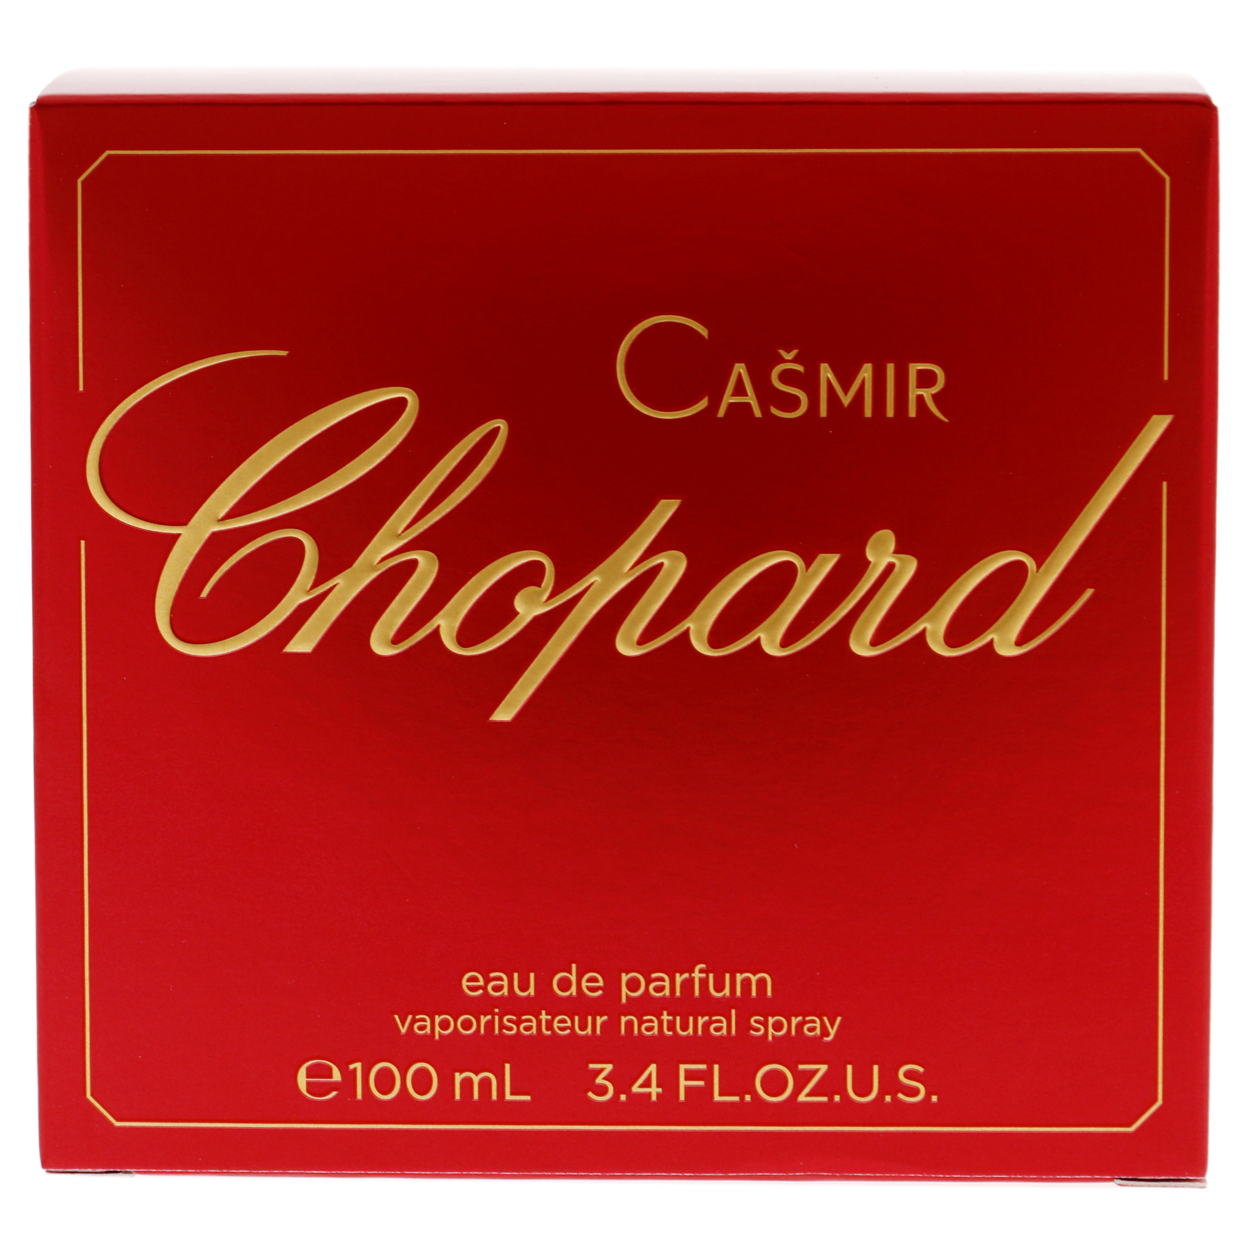 Chopard Casmir Eau de Parfum, Perfume for Women, 3.4 Oz - image 5 of 6